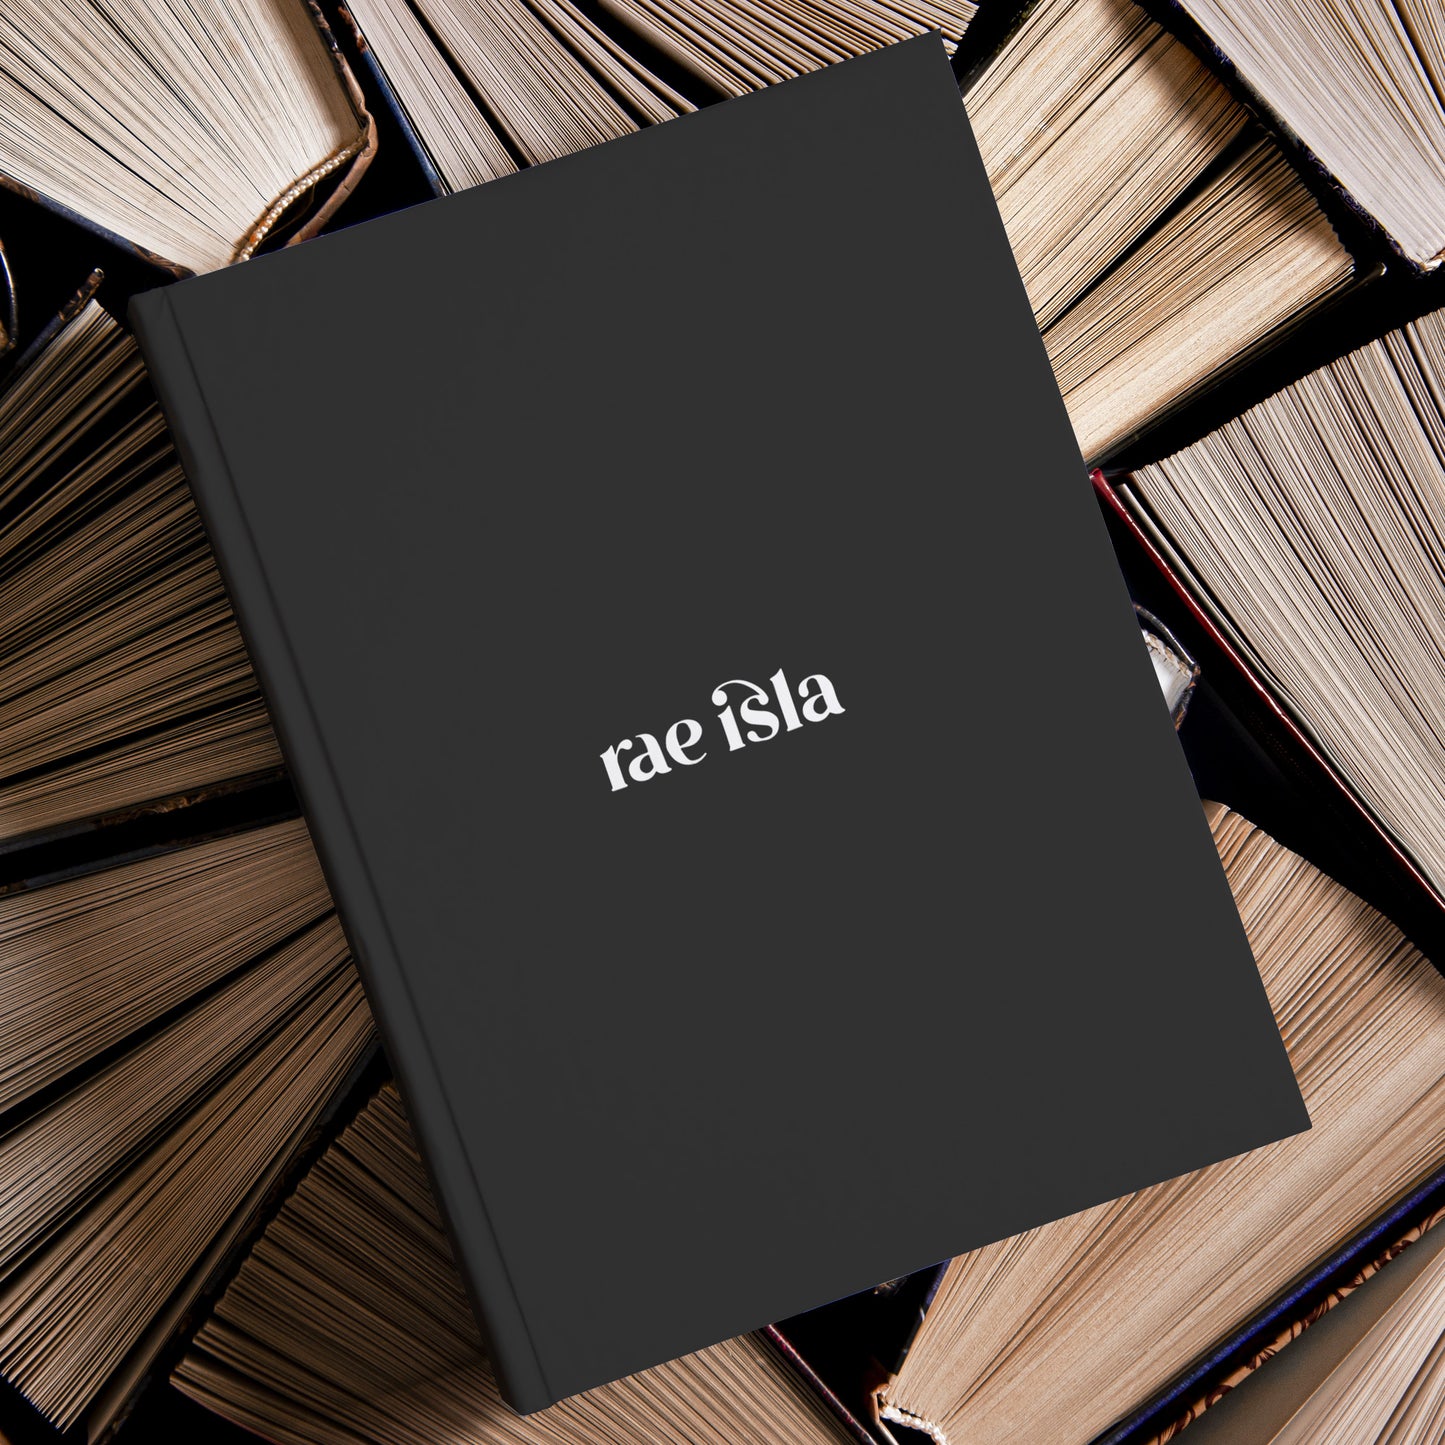 Rae Isla Hardcover Journal